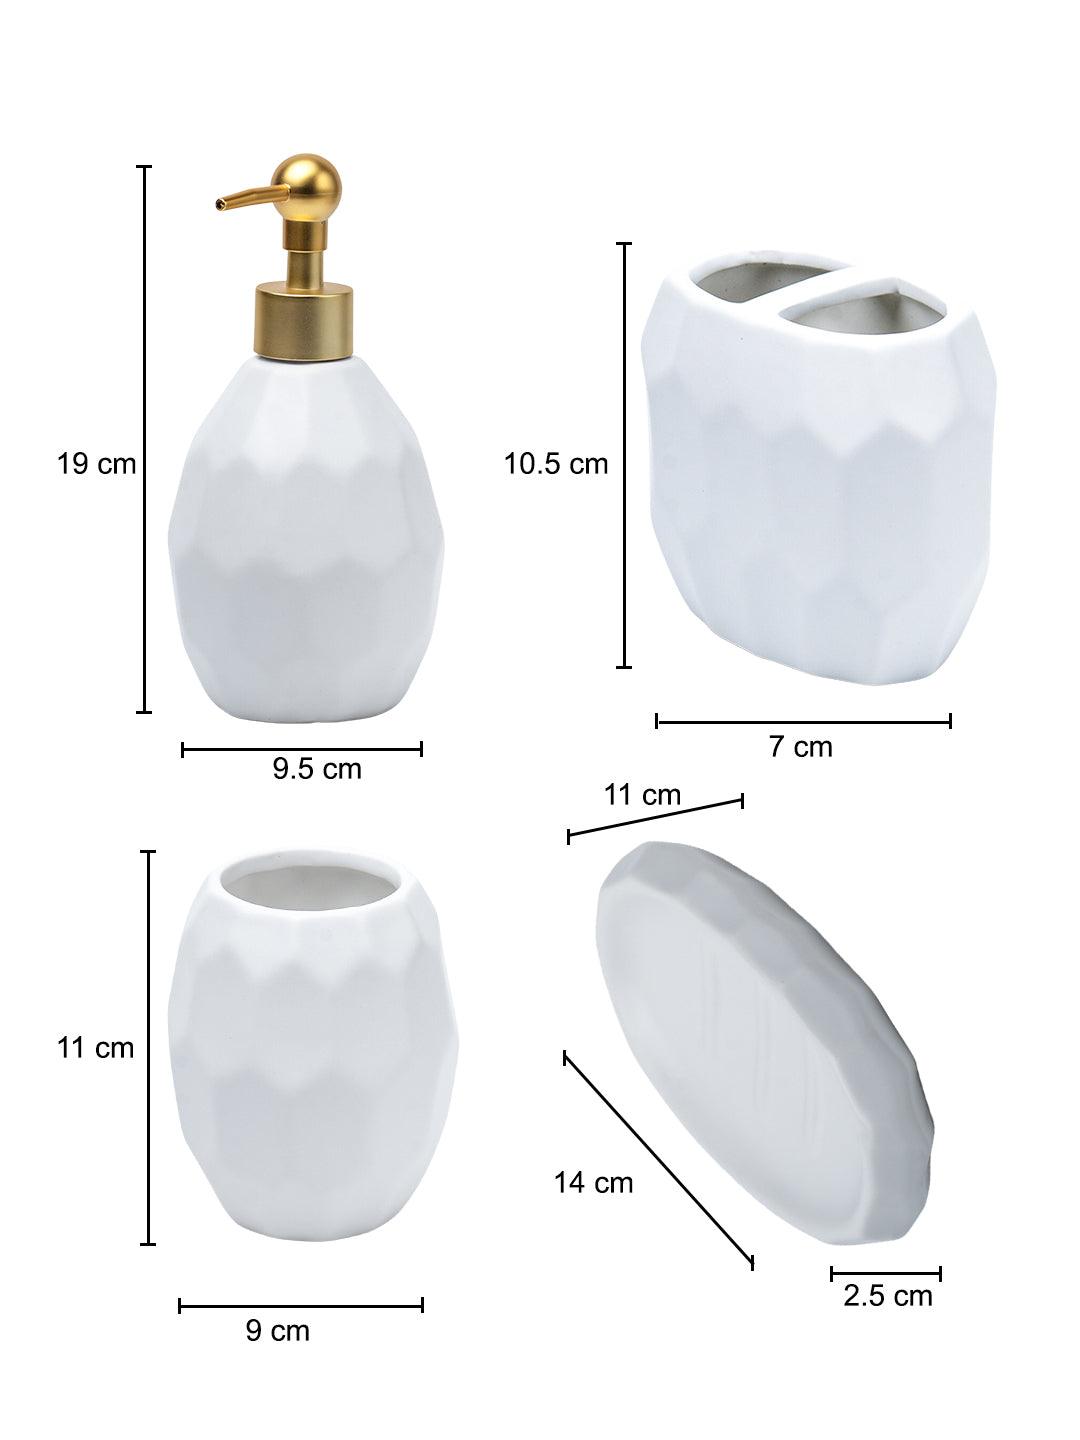 White Ceramic Bathroom Set Of 4 - Stone Finish, Bath Accessories - 7